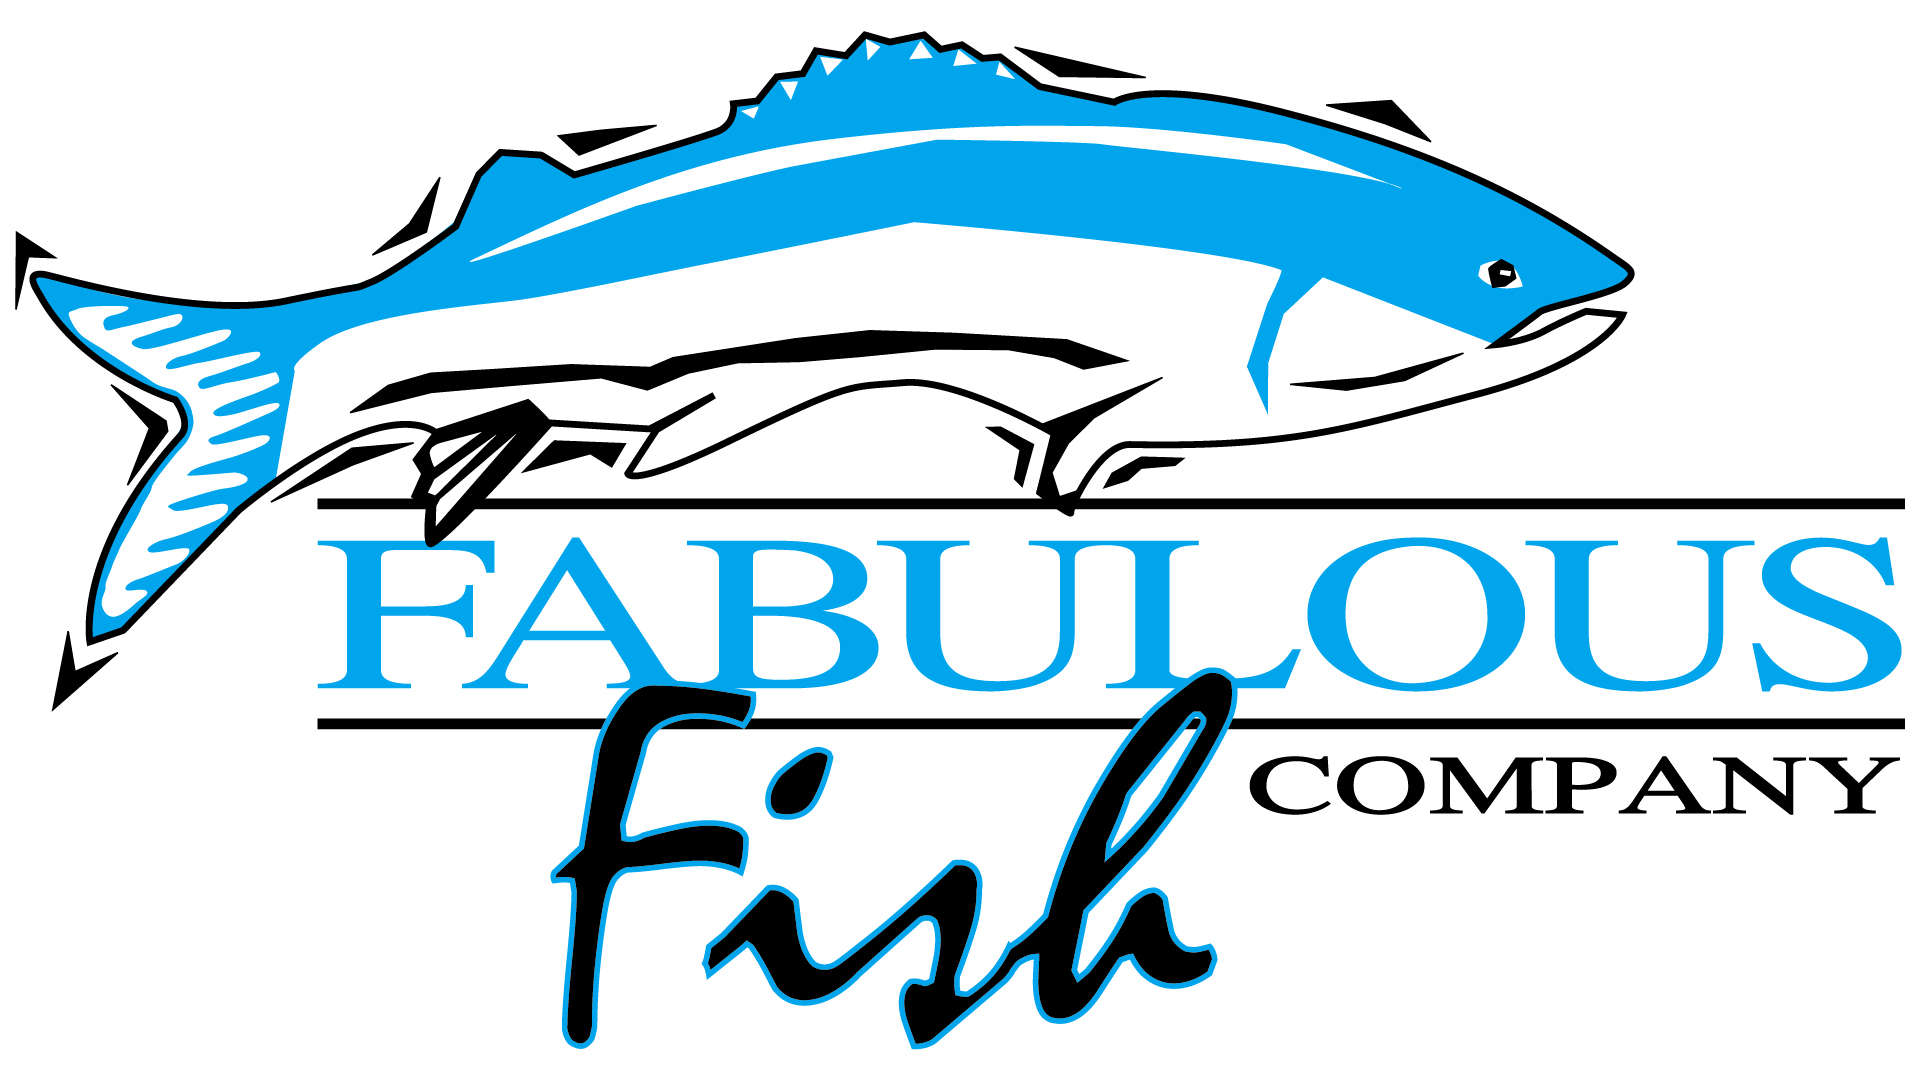 Fabulous Fish Company